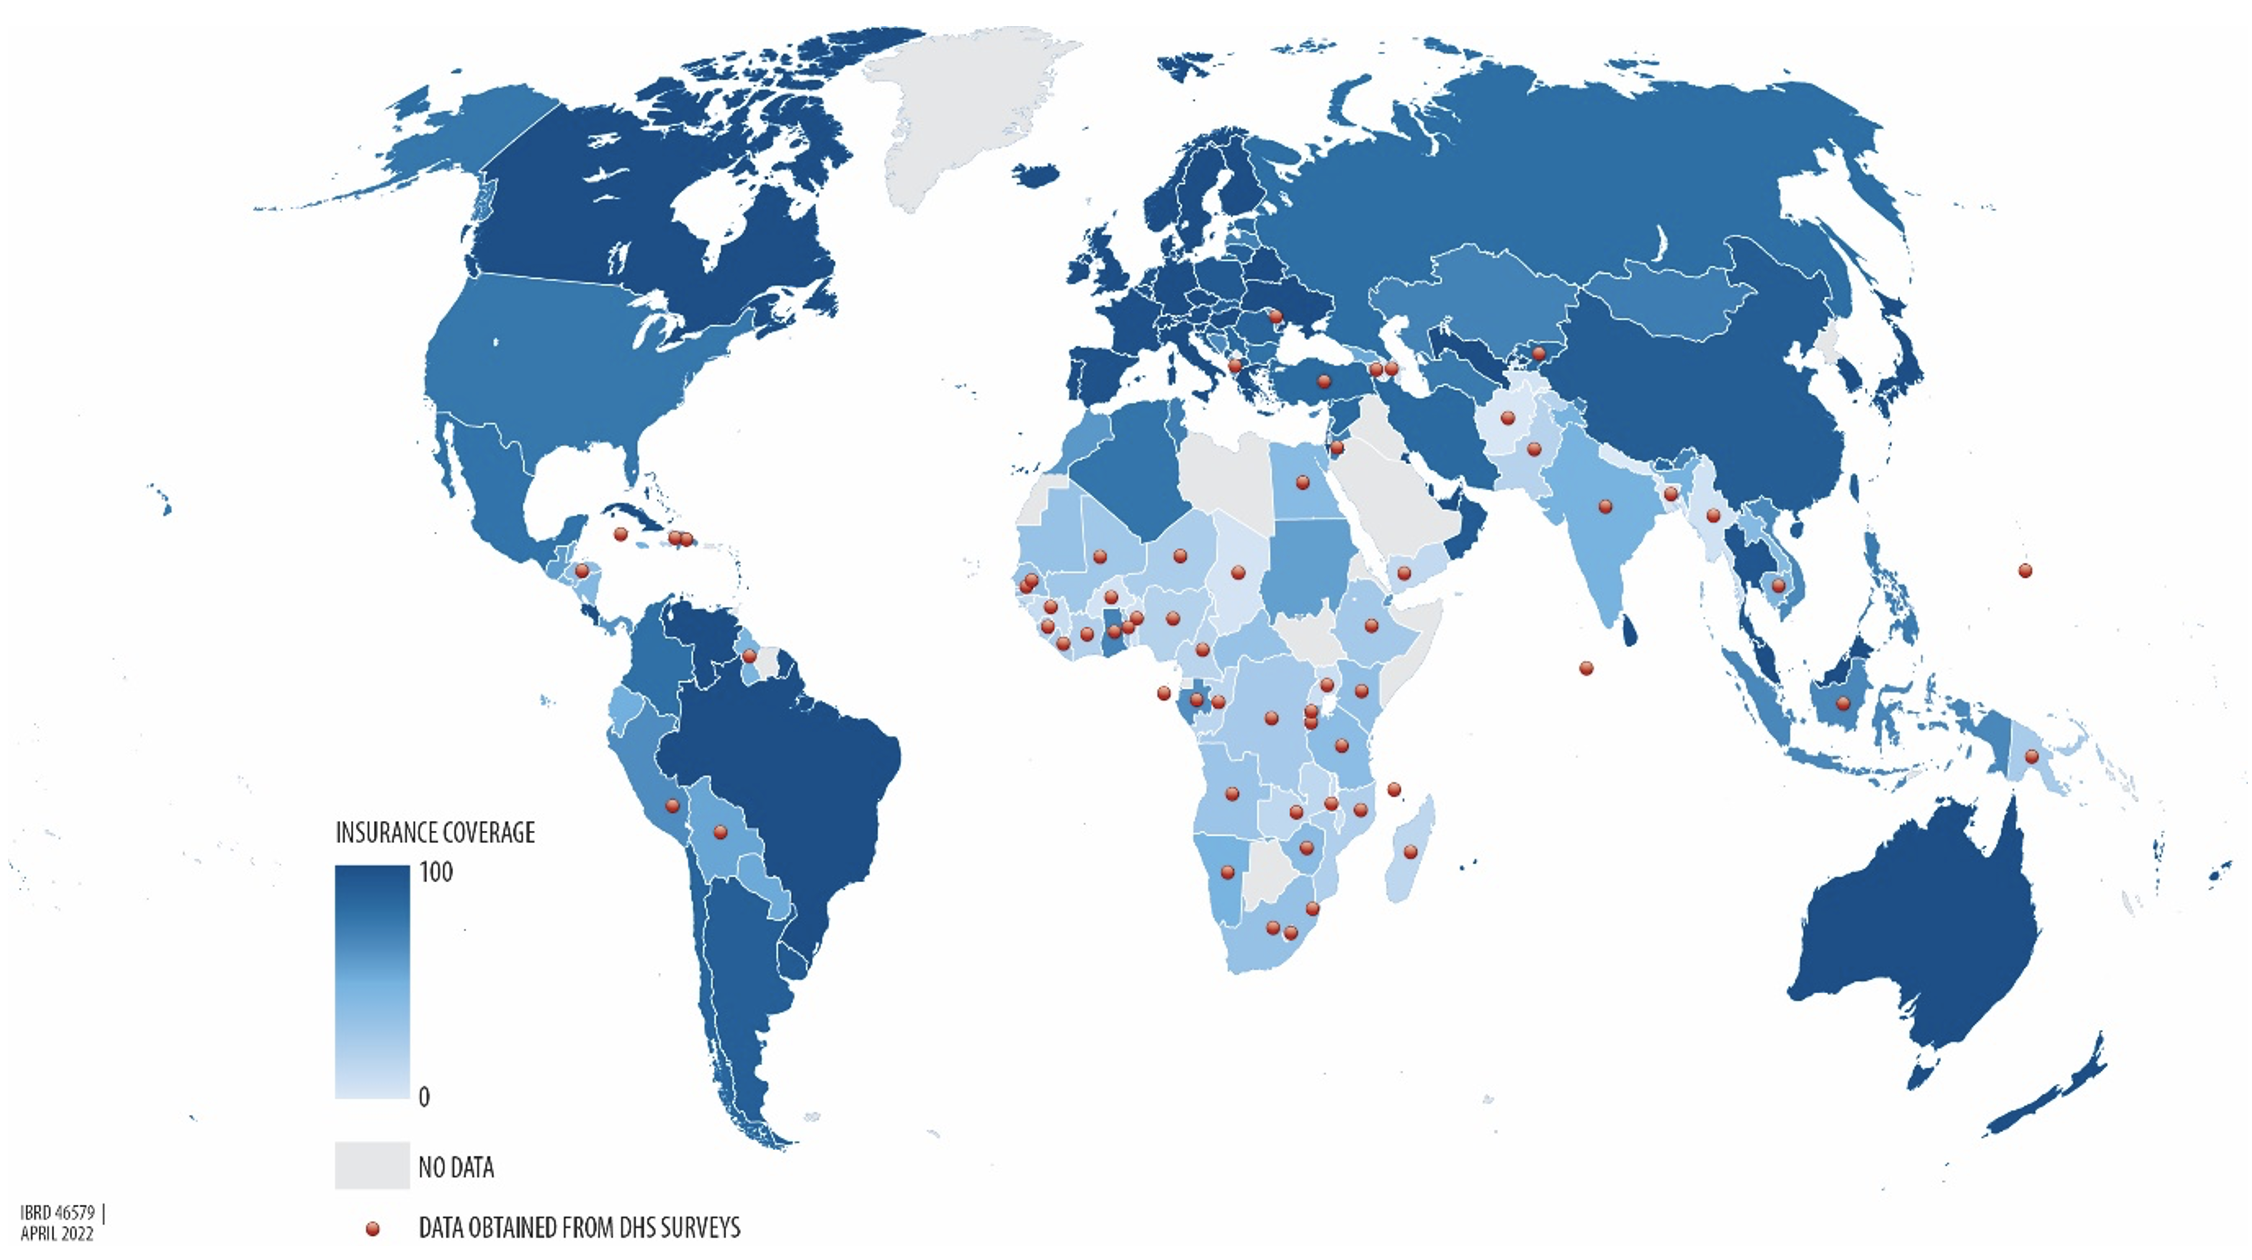 Figure 1 Health insurance coverage across the world